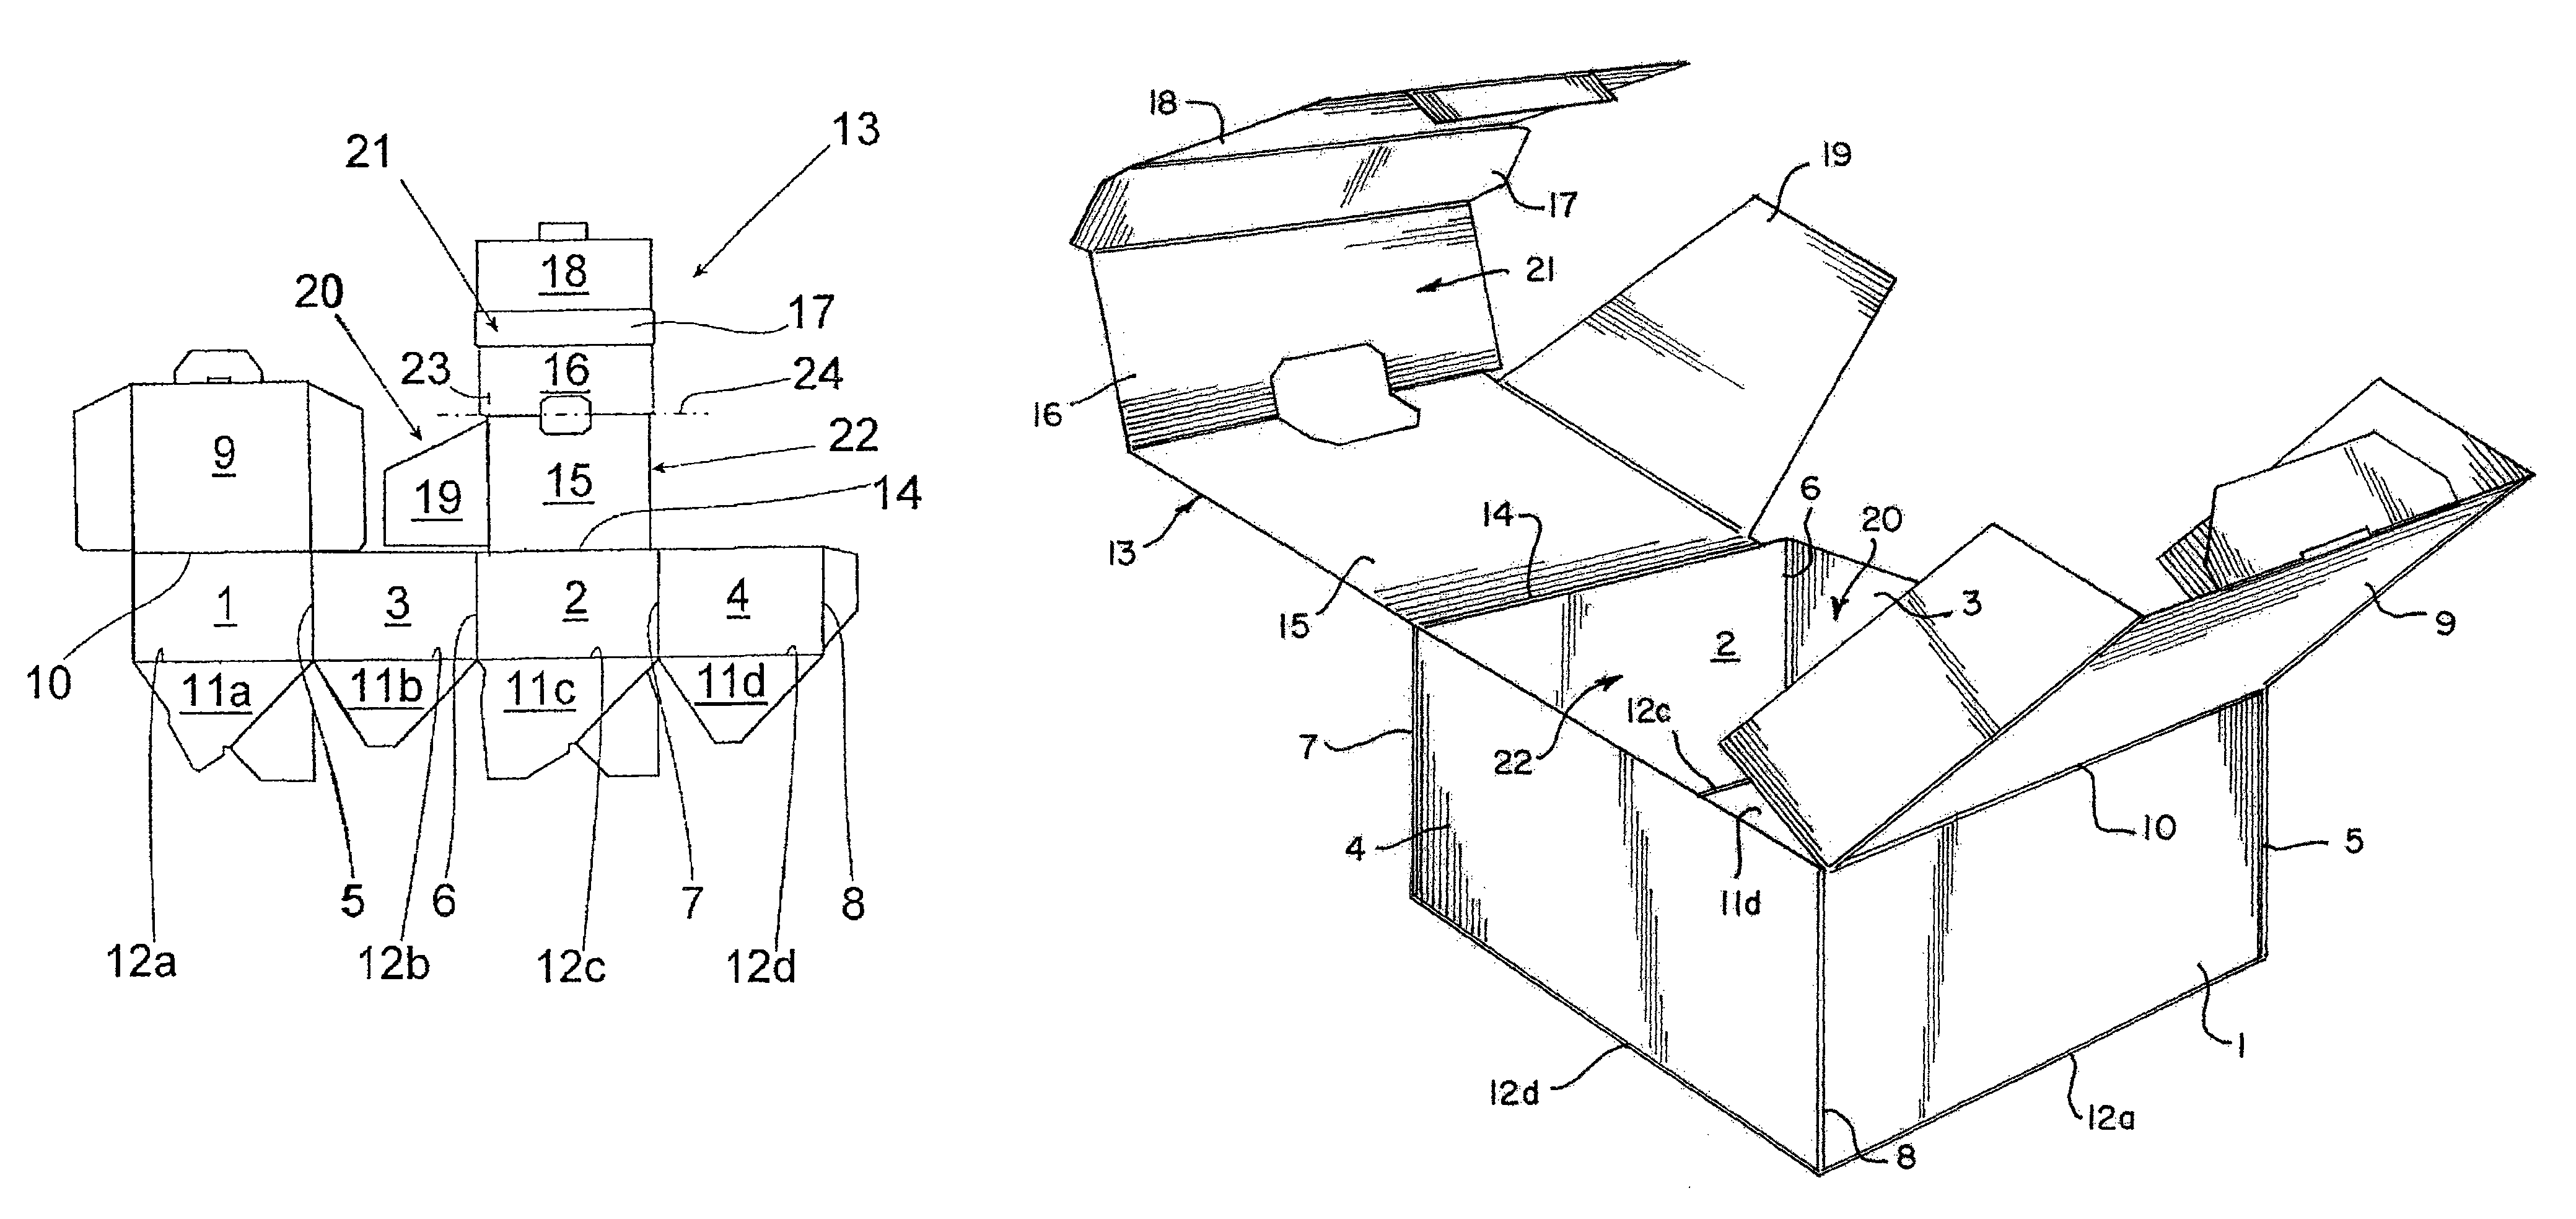 Folding carton and corresponding manufacturing machine